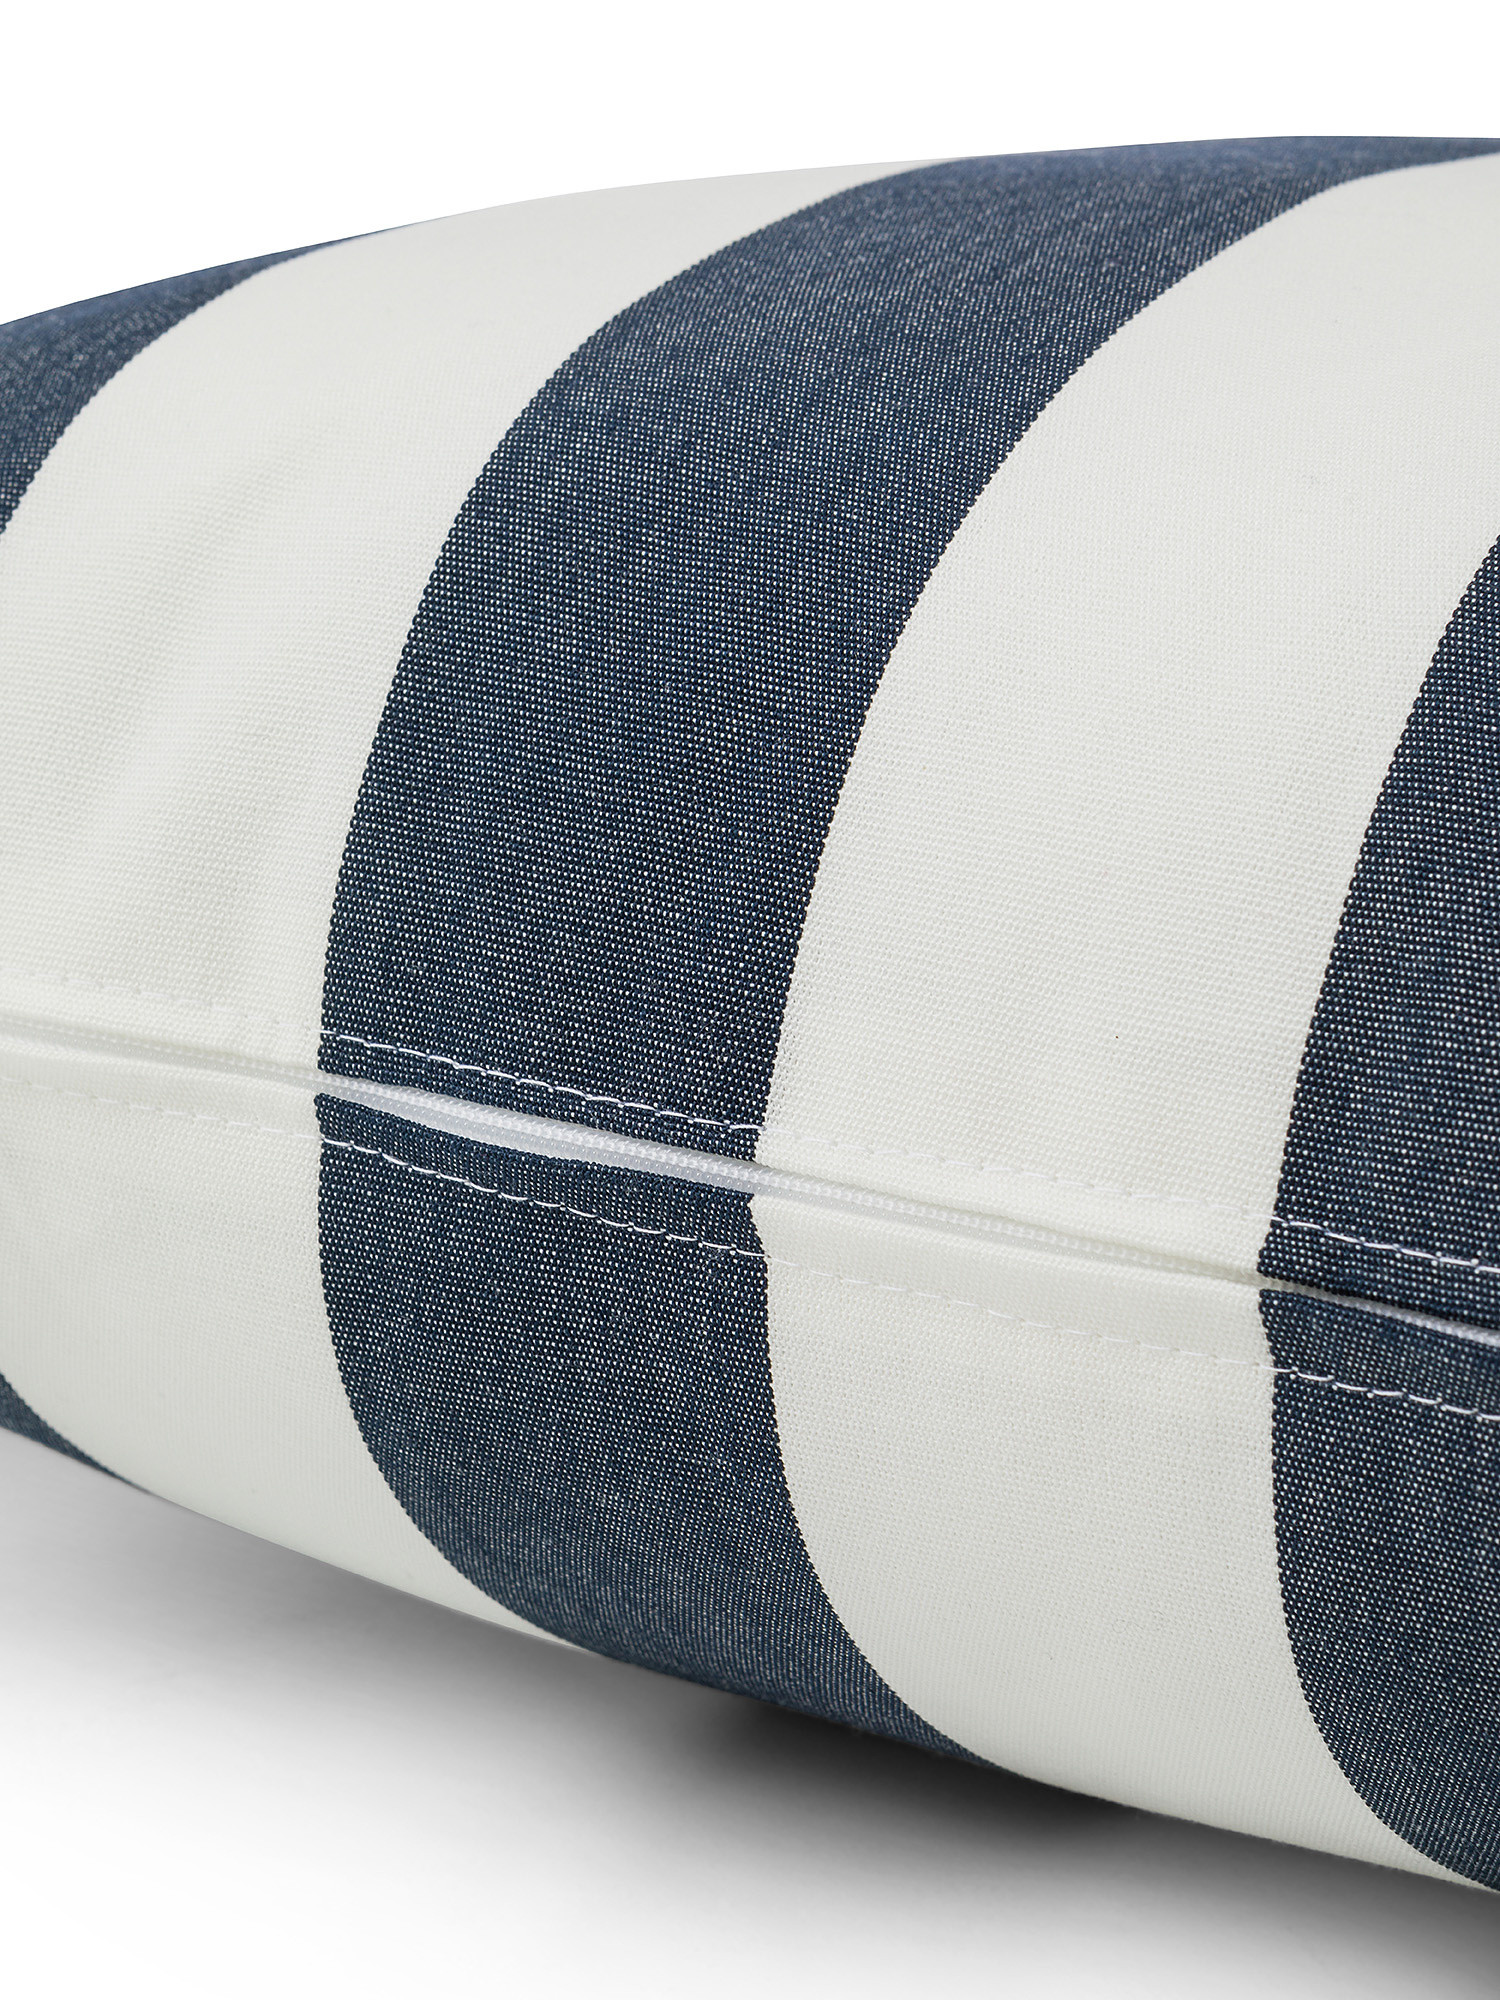 Cuscino da esterno in tessuto a righe 45x45cm, Blu, large